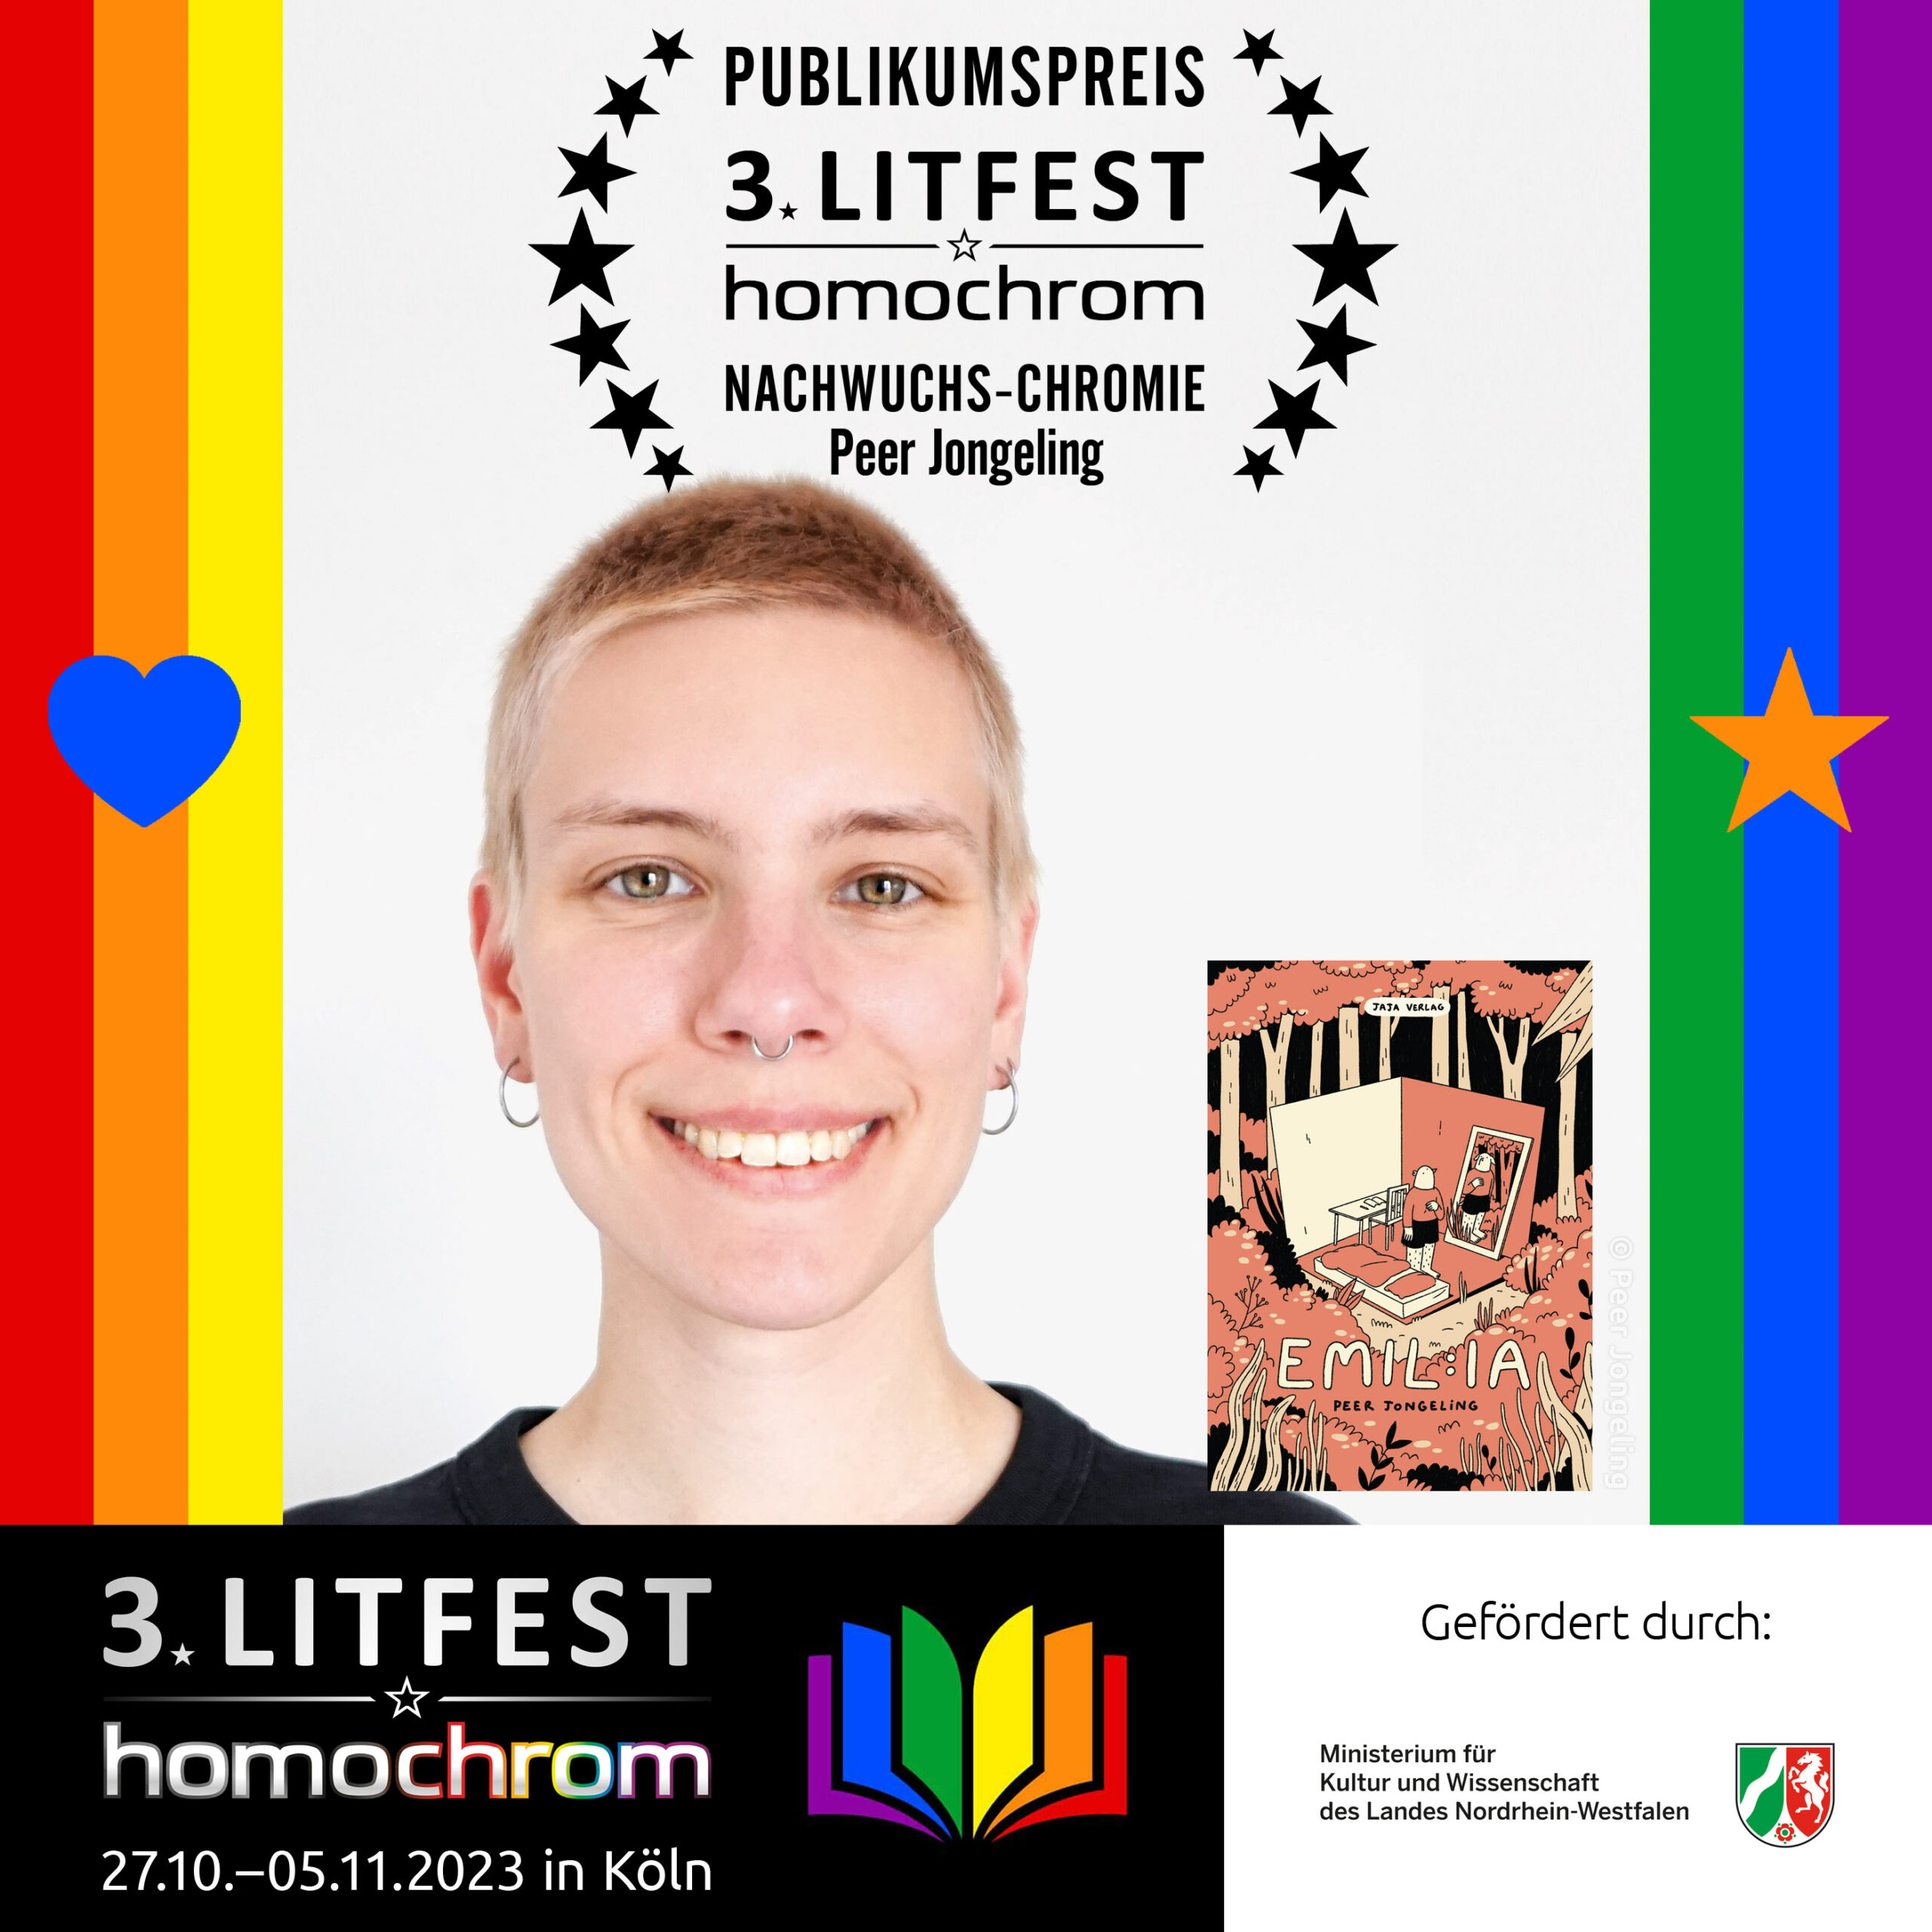 Nachwuchs-Chromie: Peer Jongeling, Autorin, Comic-Roman, Graphic Novel, Emil:ia, Litfest, homochrom, Literaturfestival, Köln, queer, LGBTIQ, awards, Publikumspreis, festival, Jaja Verlag